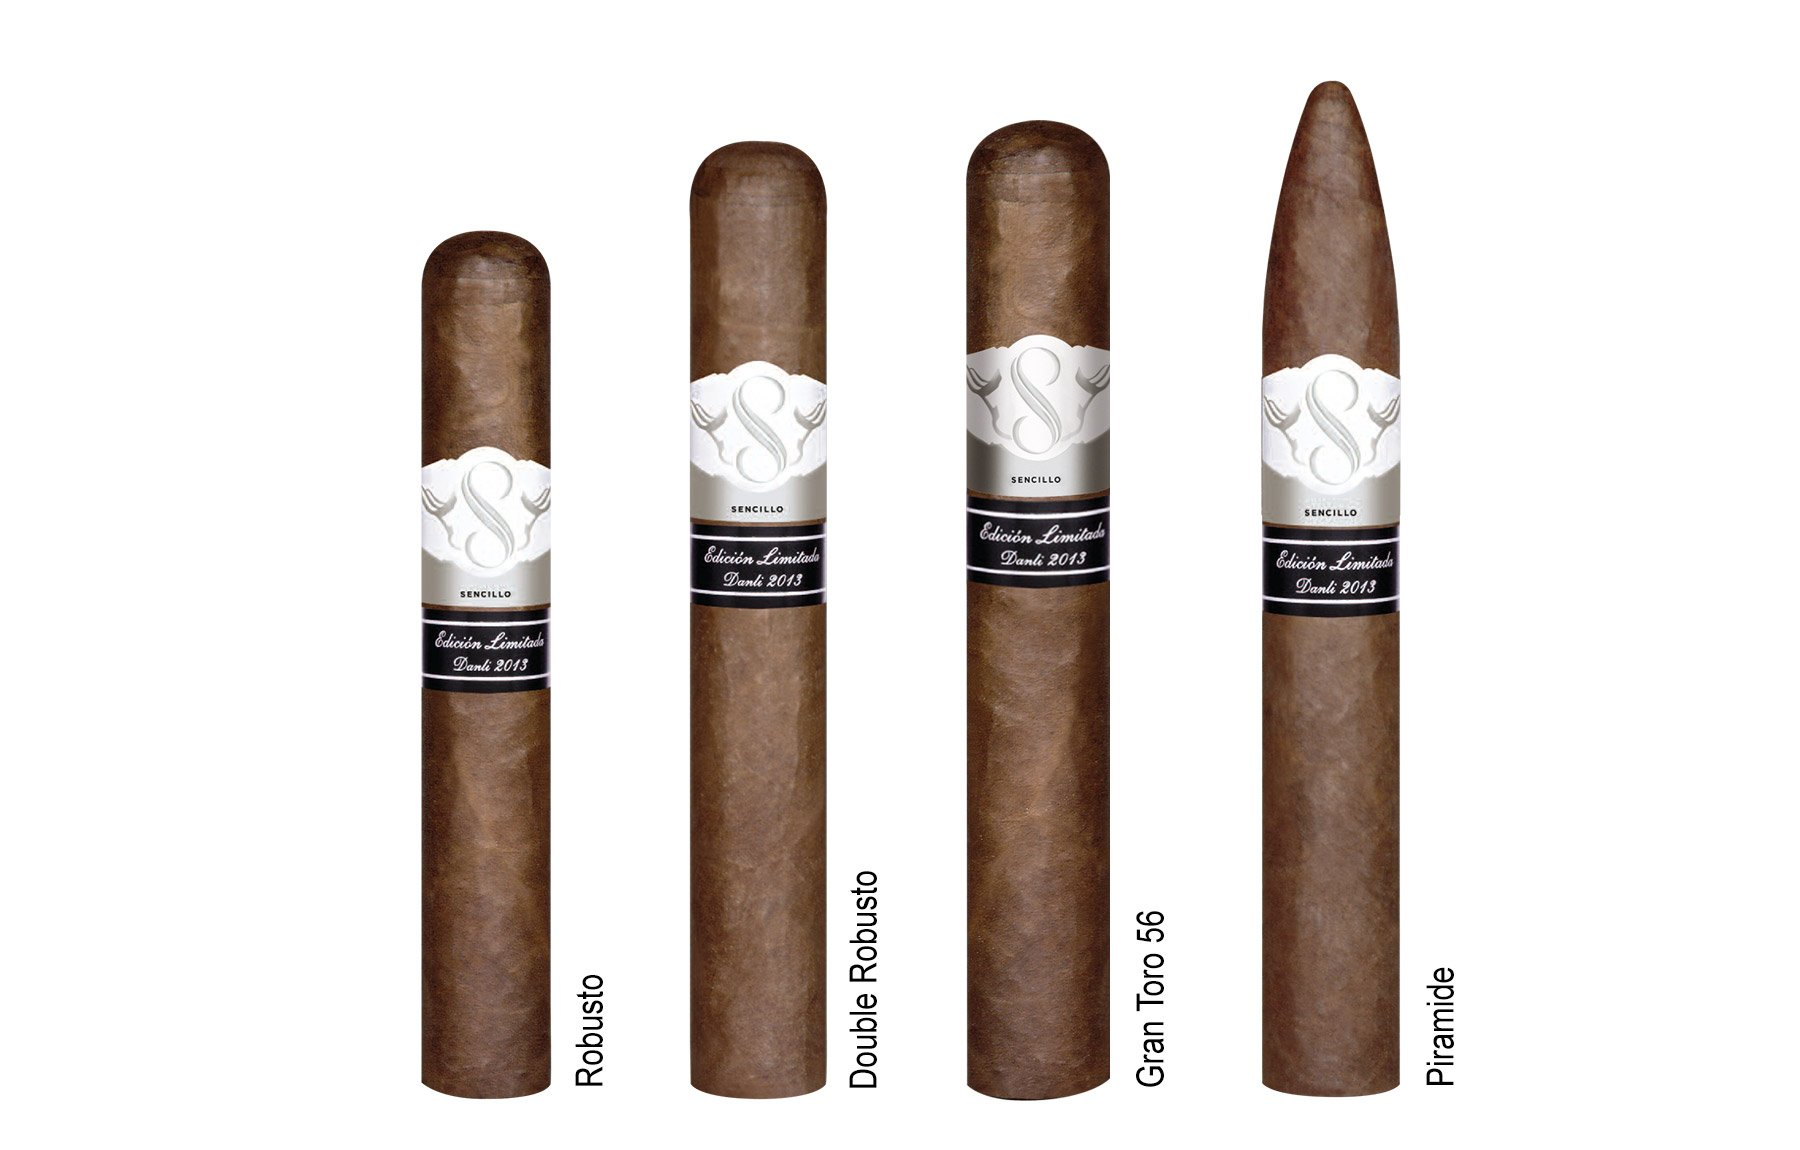 A Sencillo Platinum cigar, a truly extraordinary cigar with a distinctive flavor and Sencillo Platinum blend of Piloto Cubano tobacco added